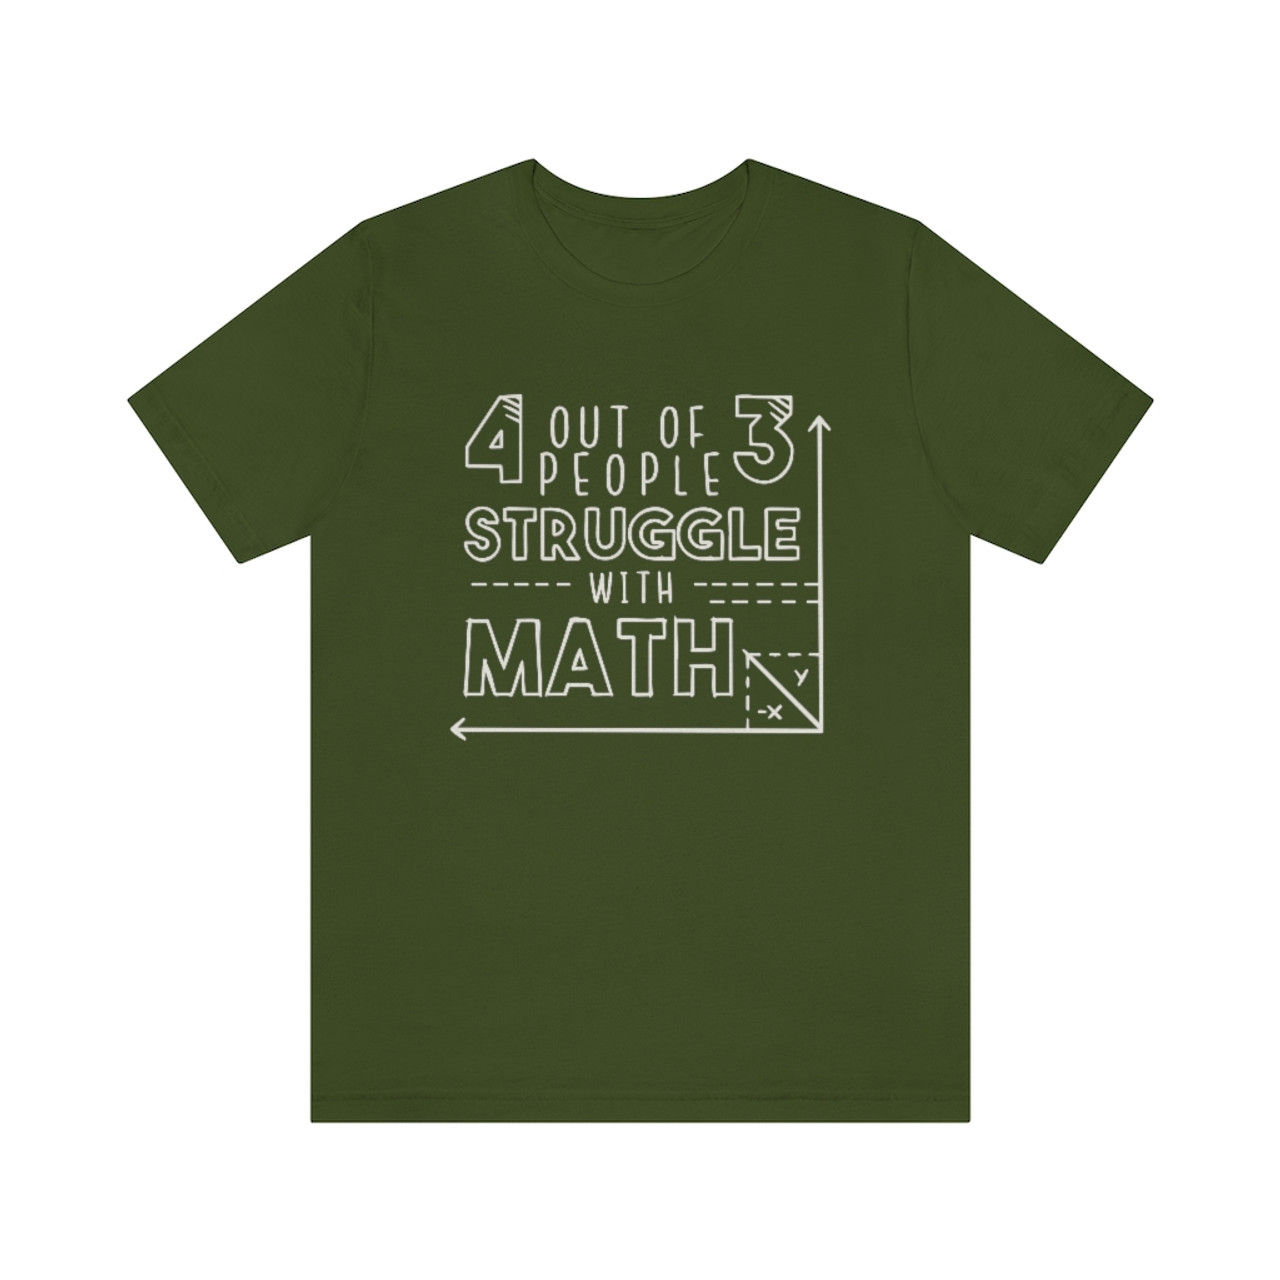 "People struggle with Math" Crew Neck T-shirt